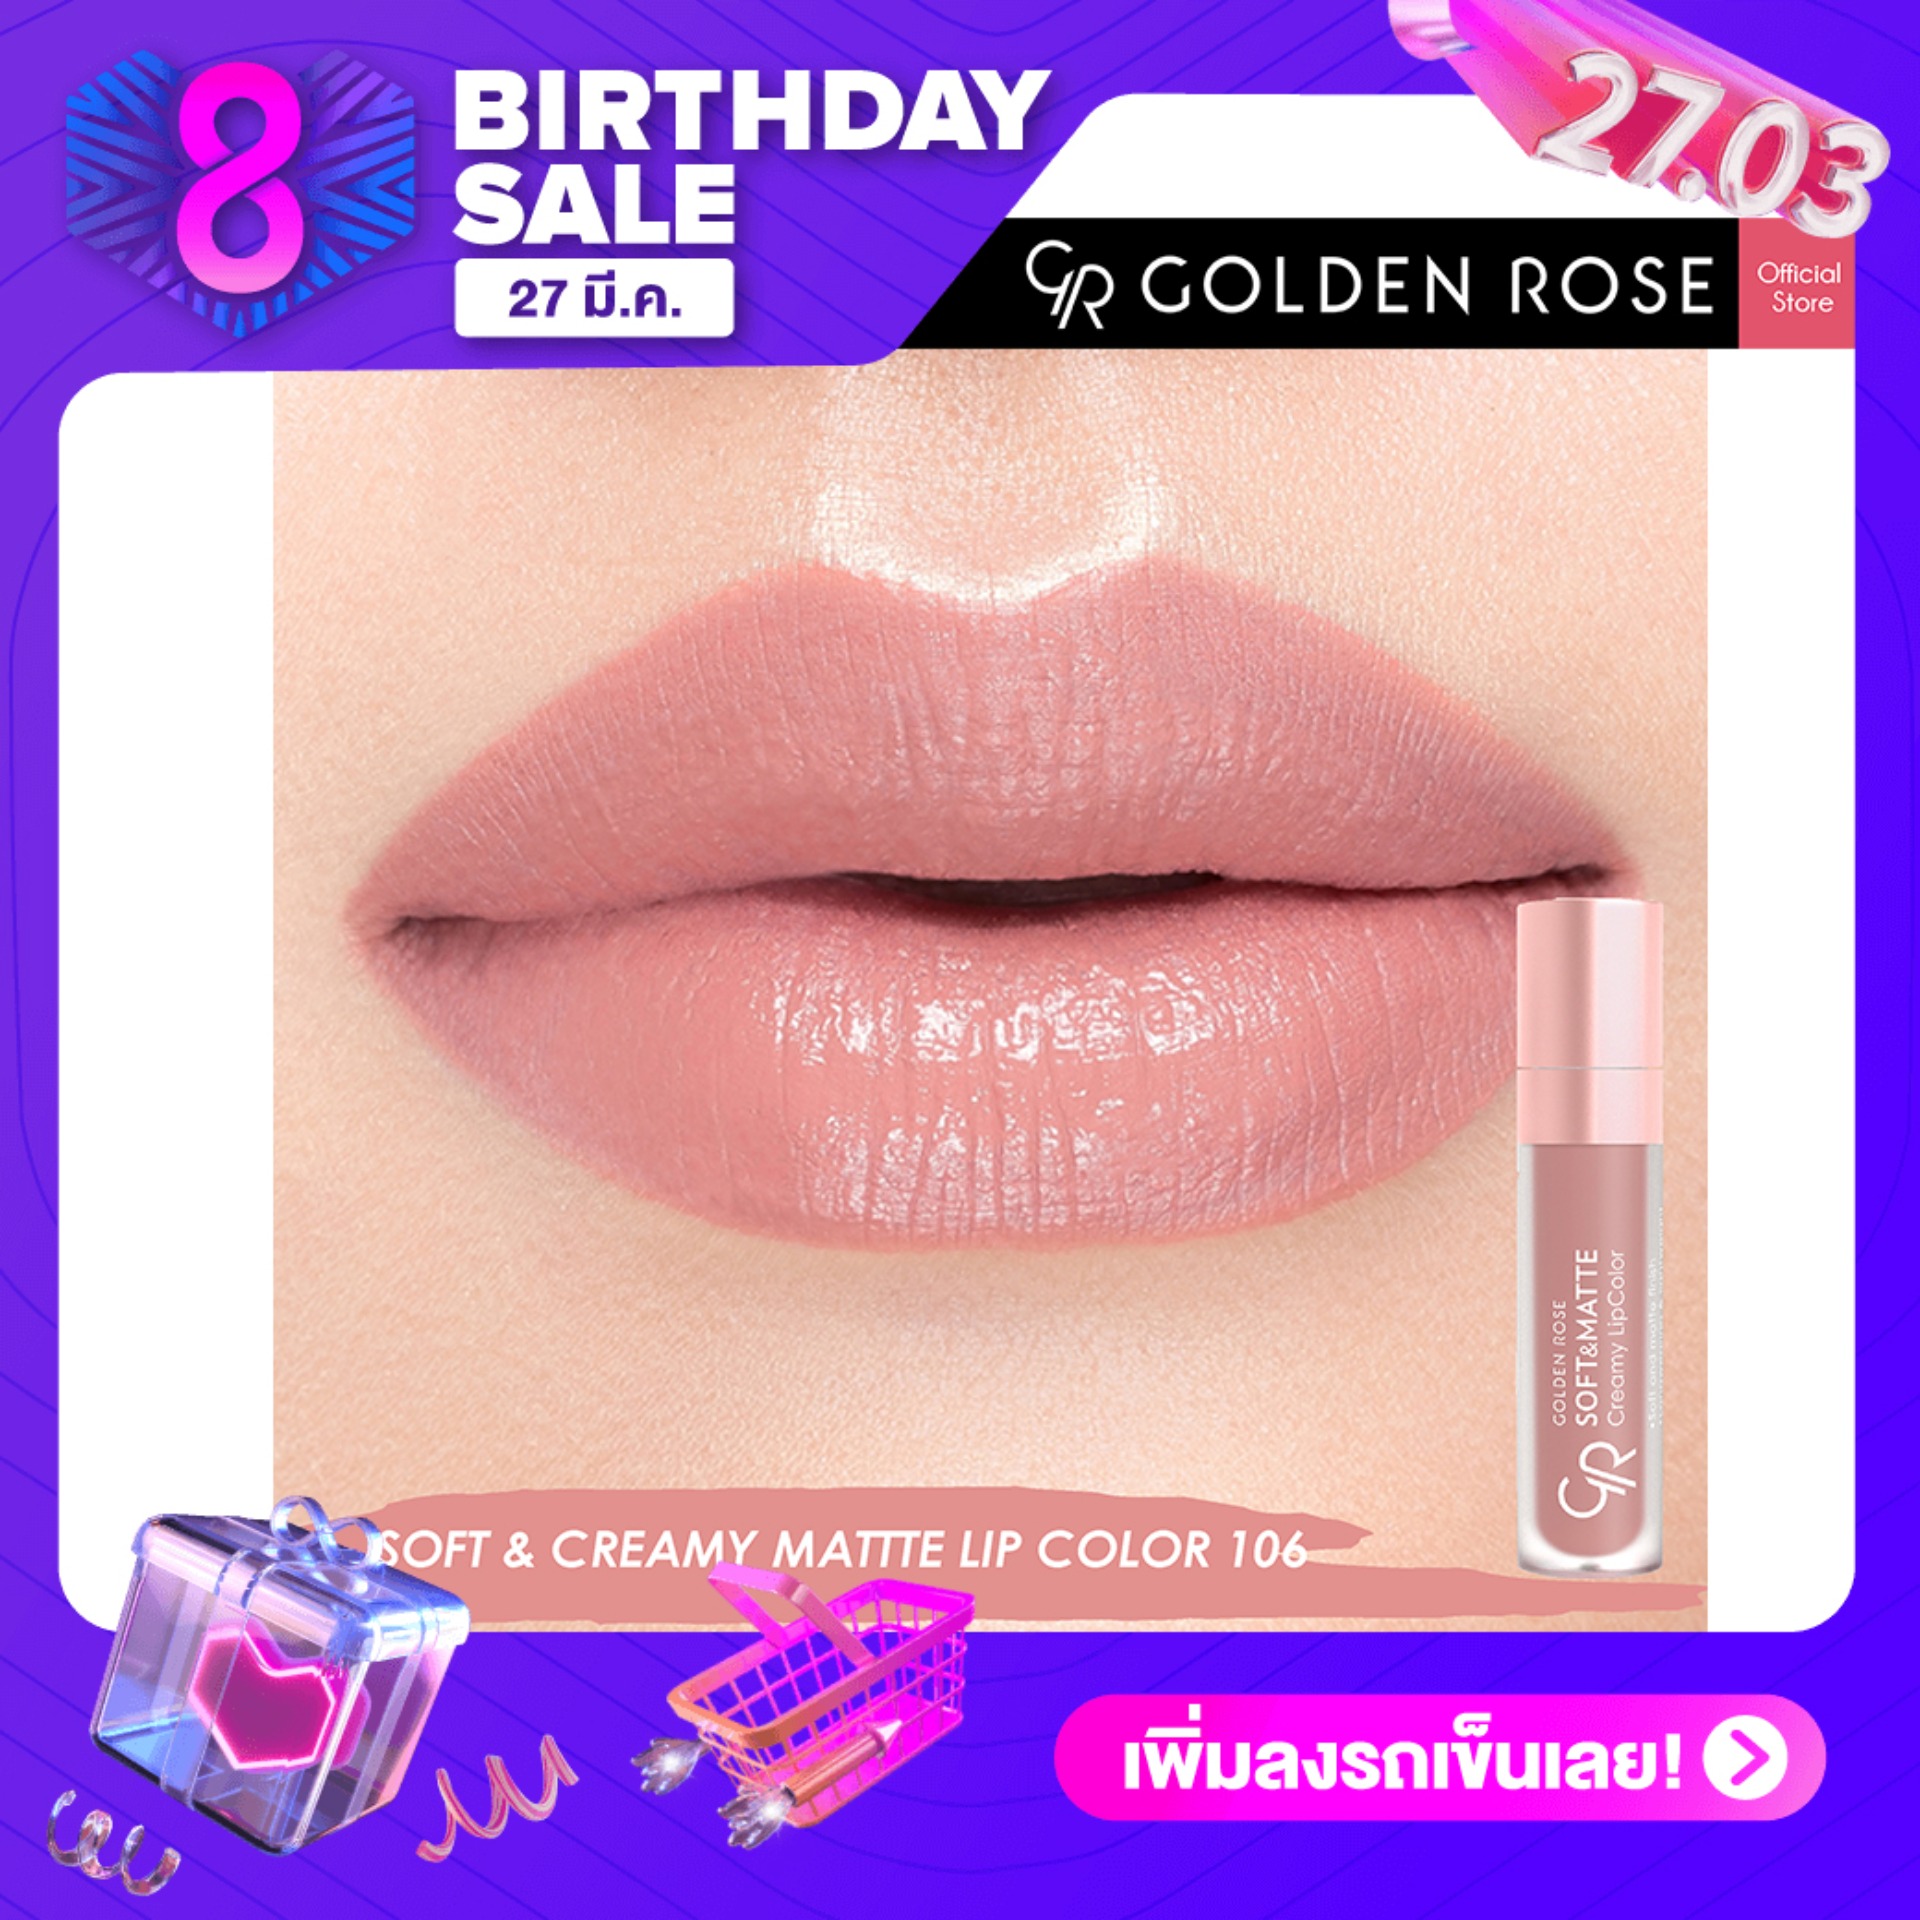 Golden Rose Soft & Matte Creamy Lip Color No.106